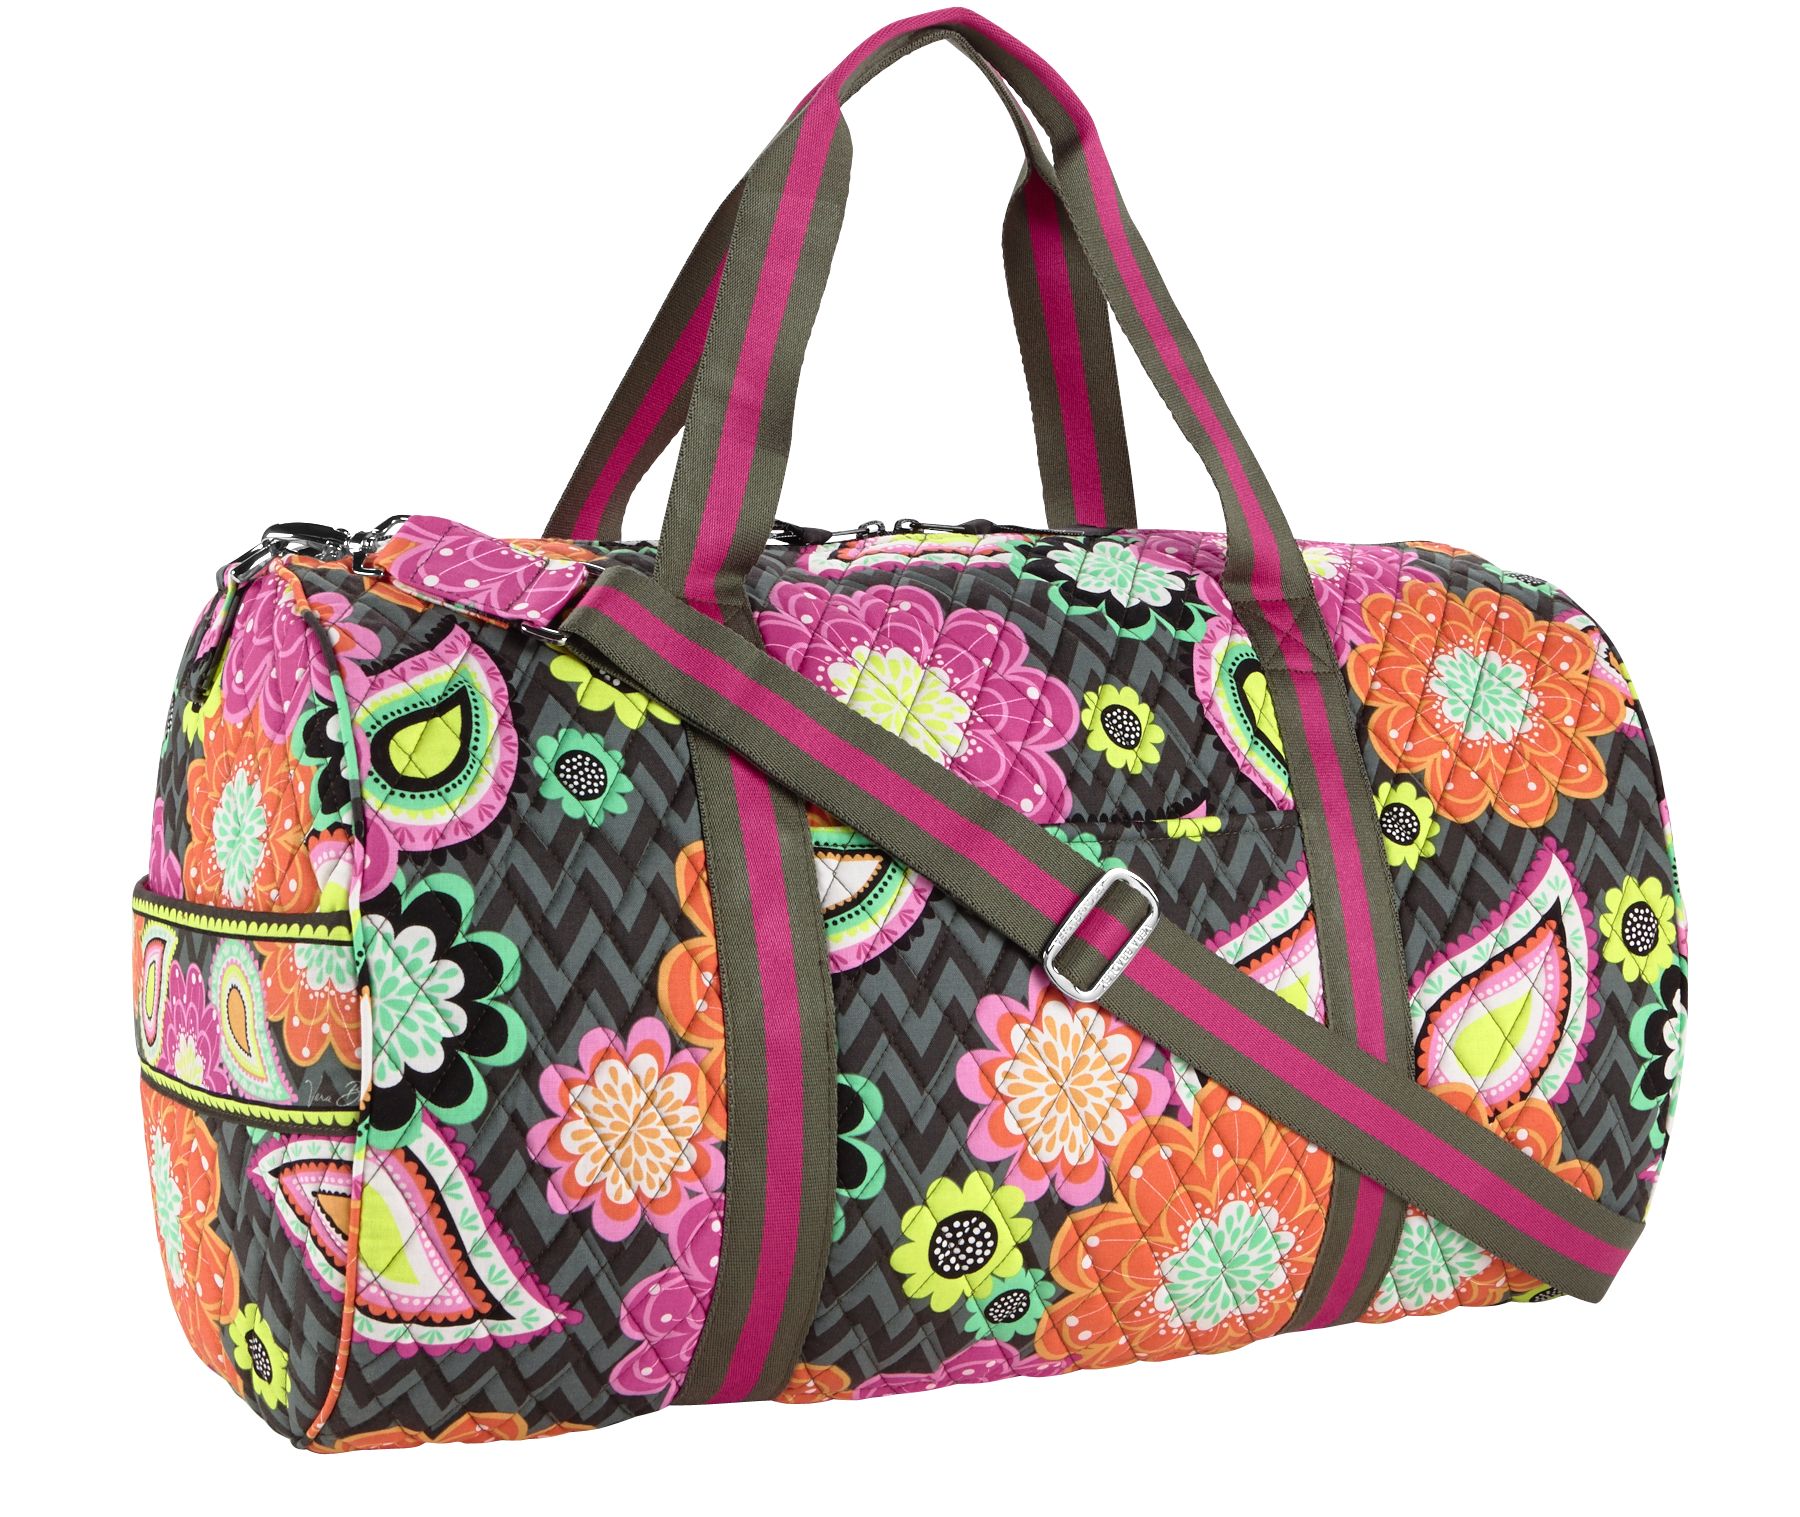 Vera Bradley Round Duffel Travel Bag | eBay